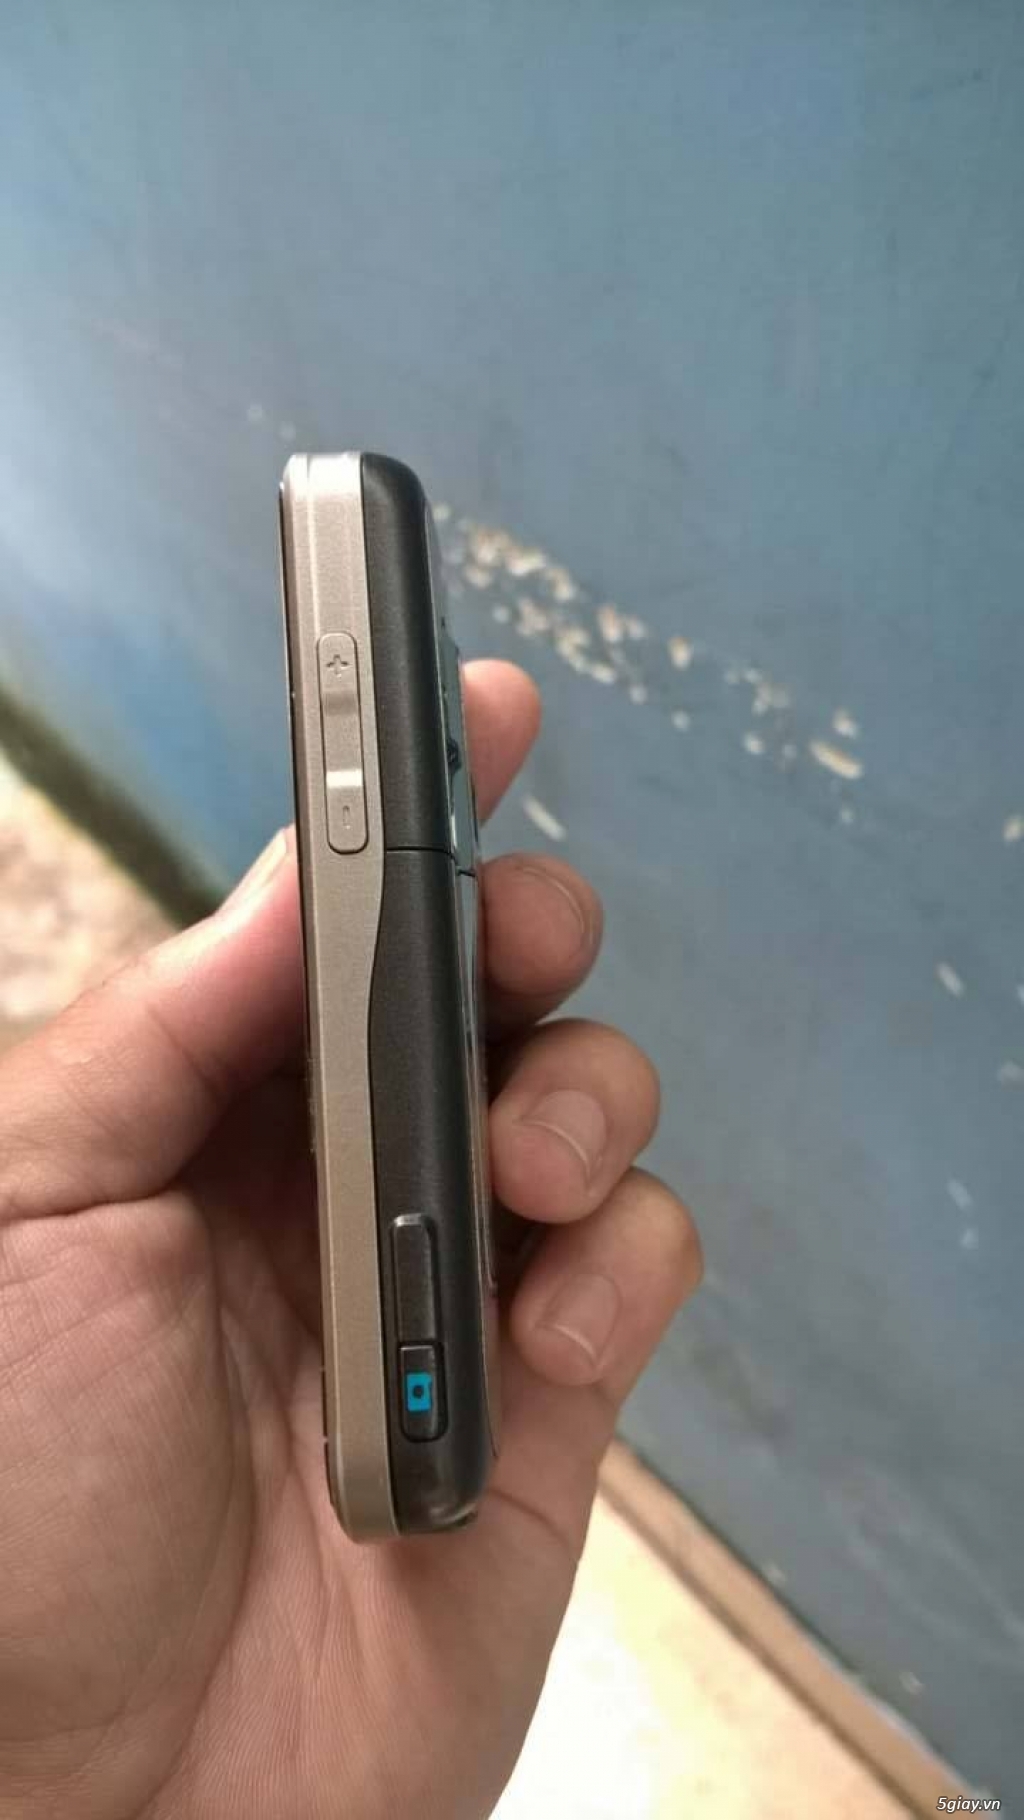 Nokia e63, n2630, nokia x2-01, n6233, n6120c, huawei g6680 - 10